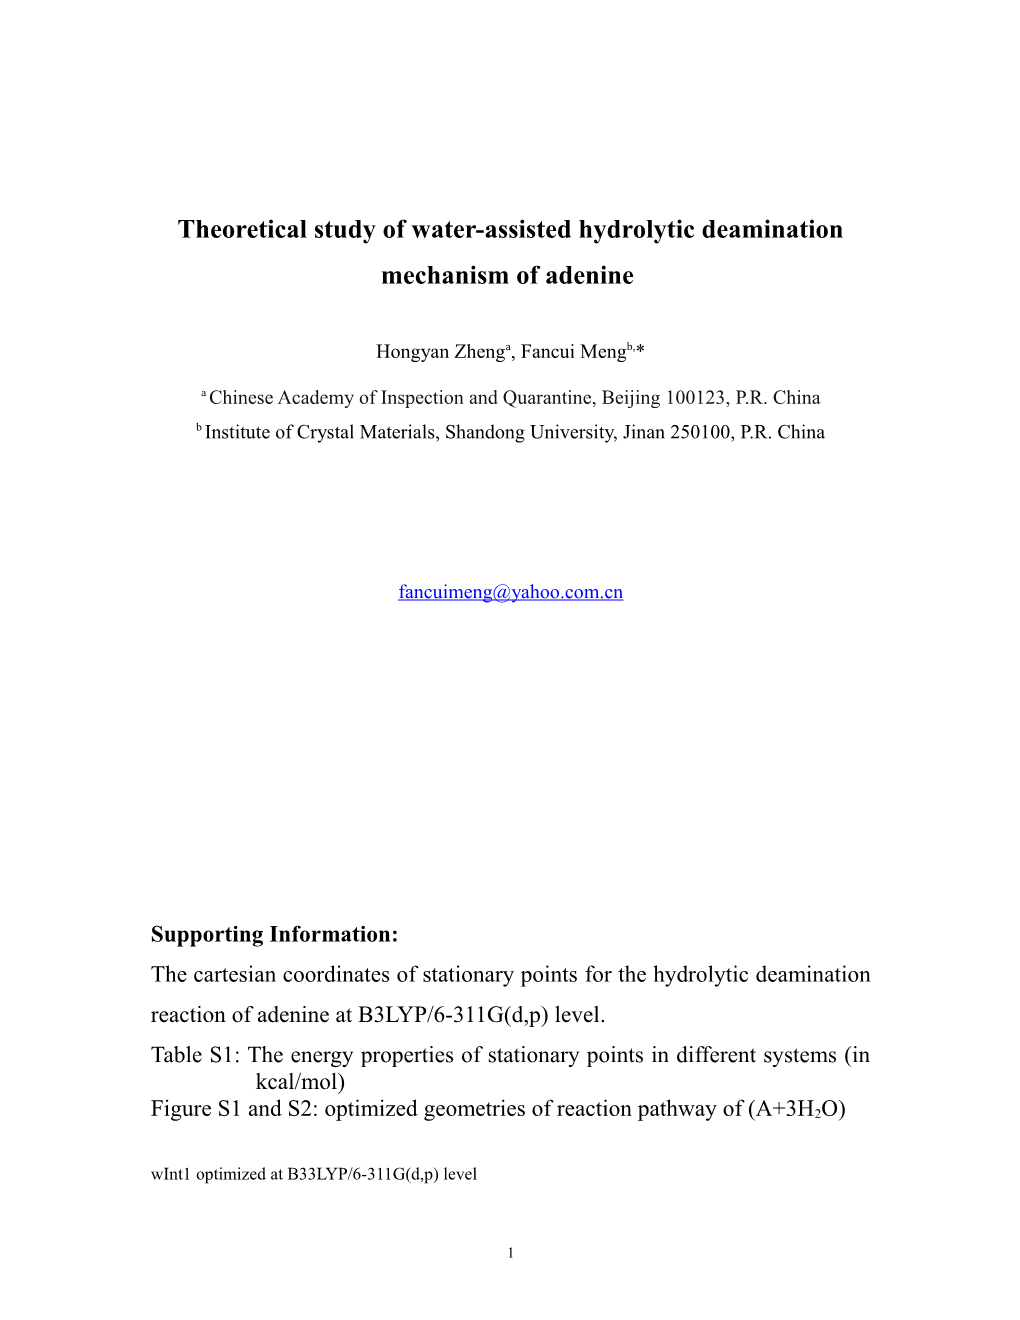 Theoretical Study on the Hydrolytic Deamination Mechanism of Adenosine